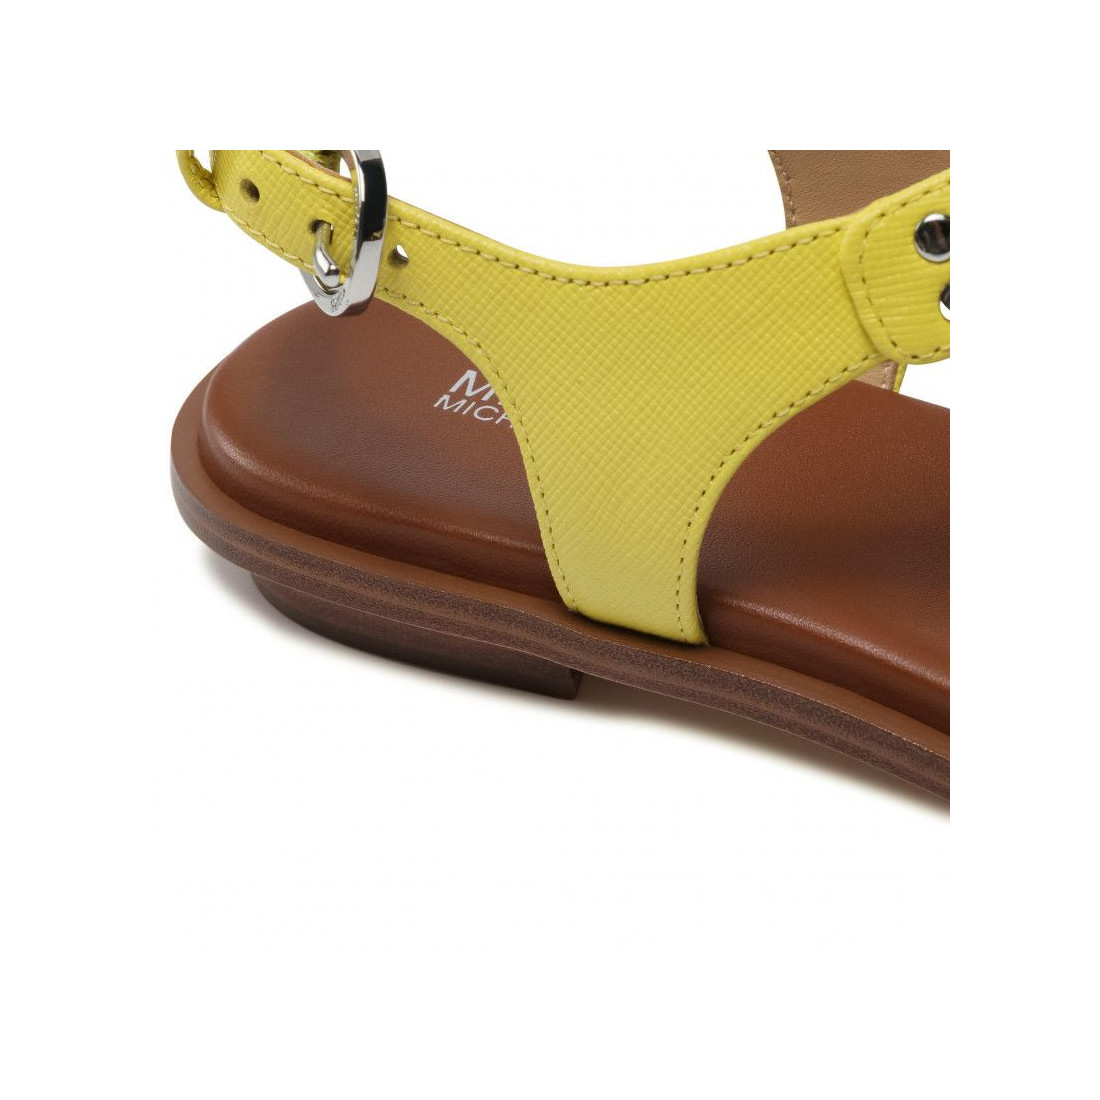 Sandalo Michael Kors Plate giallo in pelle con placca e logo